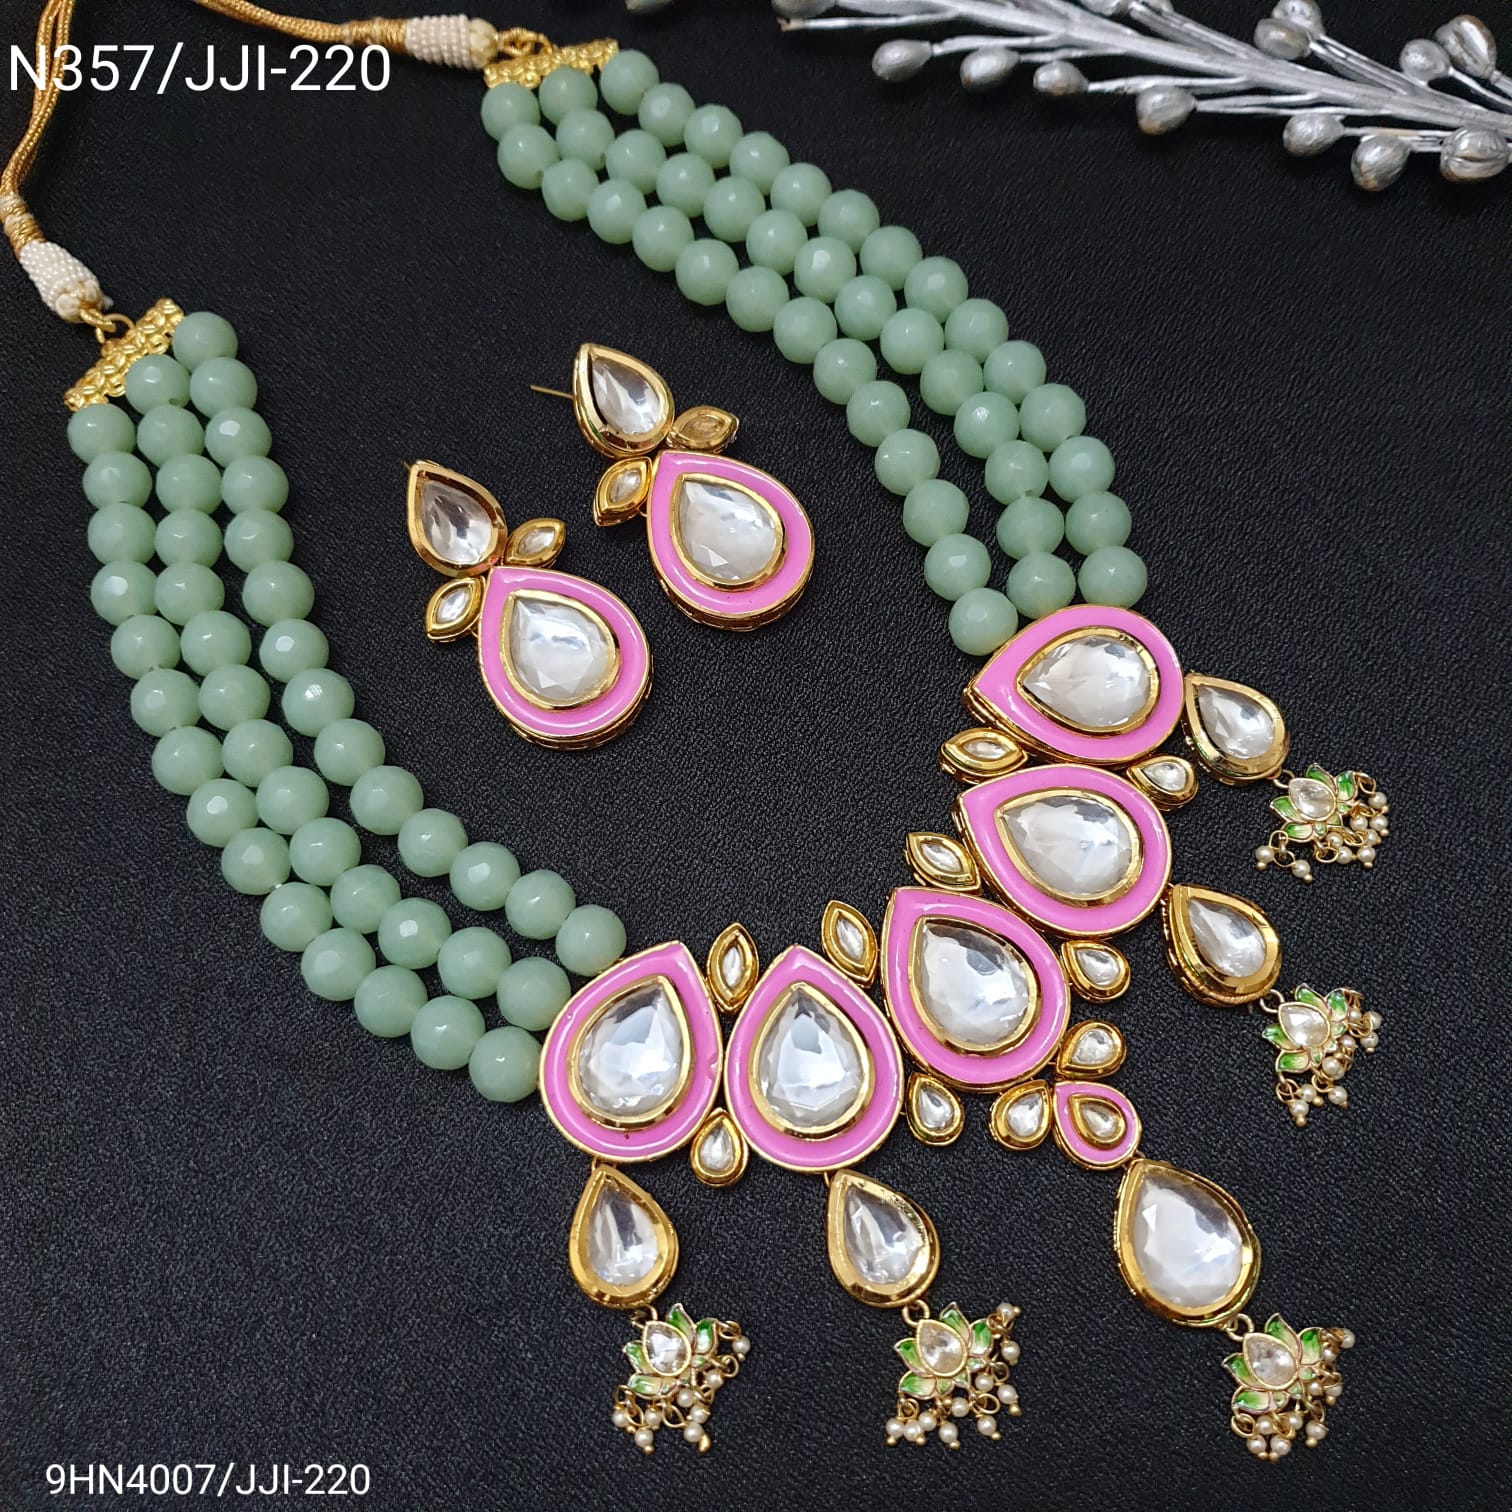 Designer Kundan Meenakari Necklace Set With Earrings